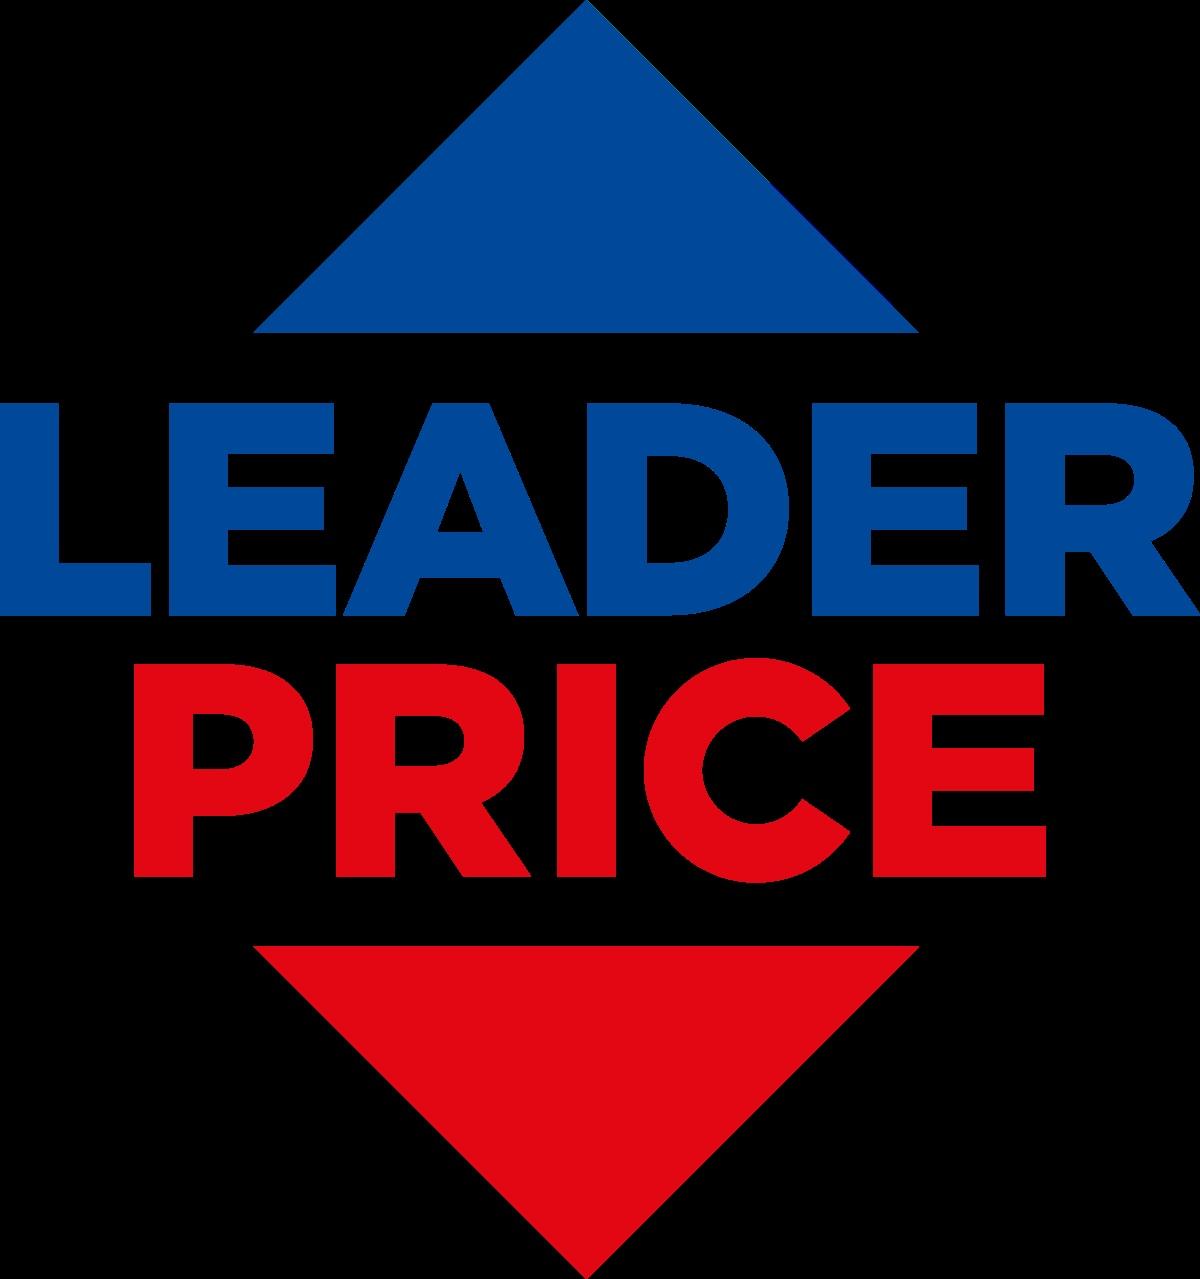 Leader Price Rouen